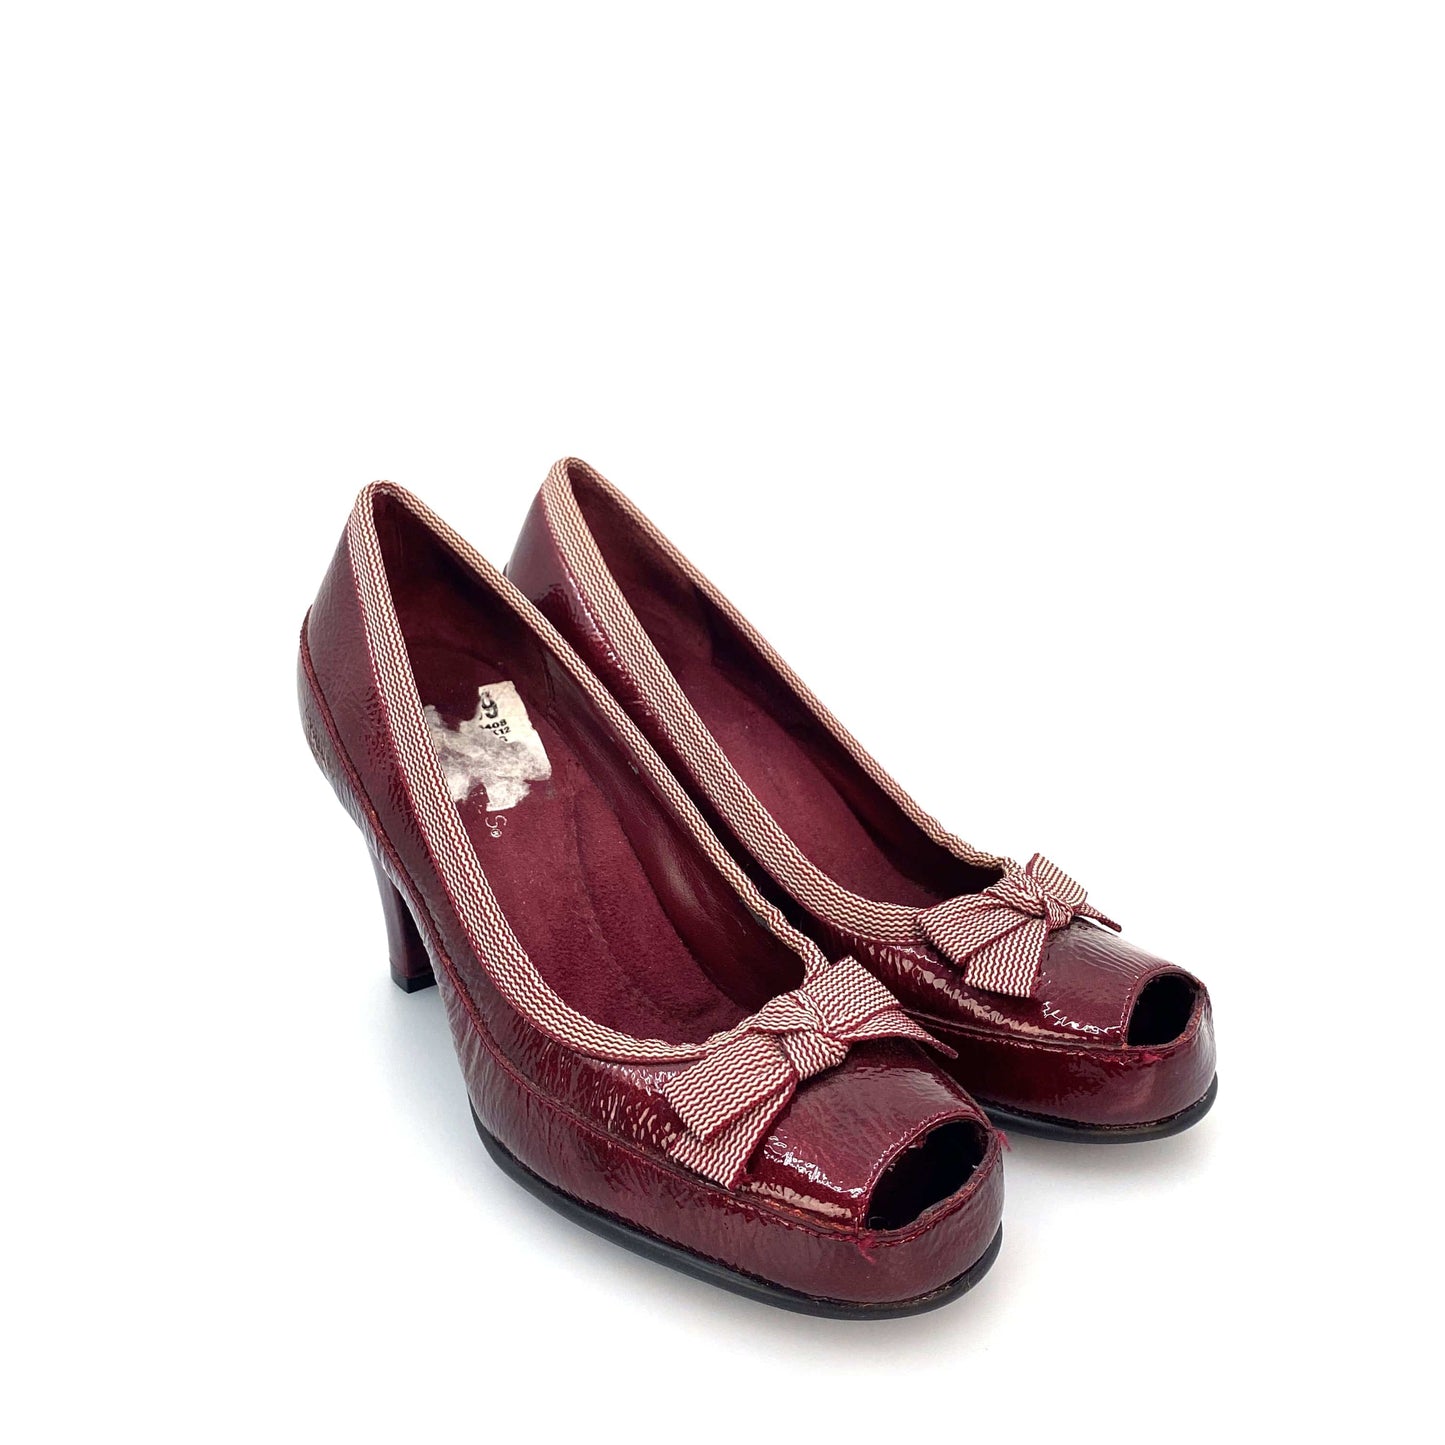 AEROSOLES BENEFIT Womens Size 5.5 Maroon Red Peep Toe Bow Pumps Heels Shoes